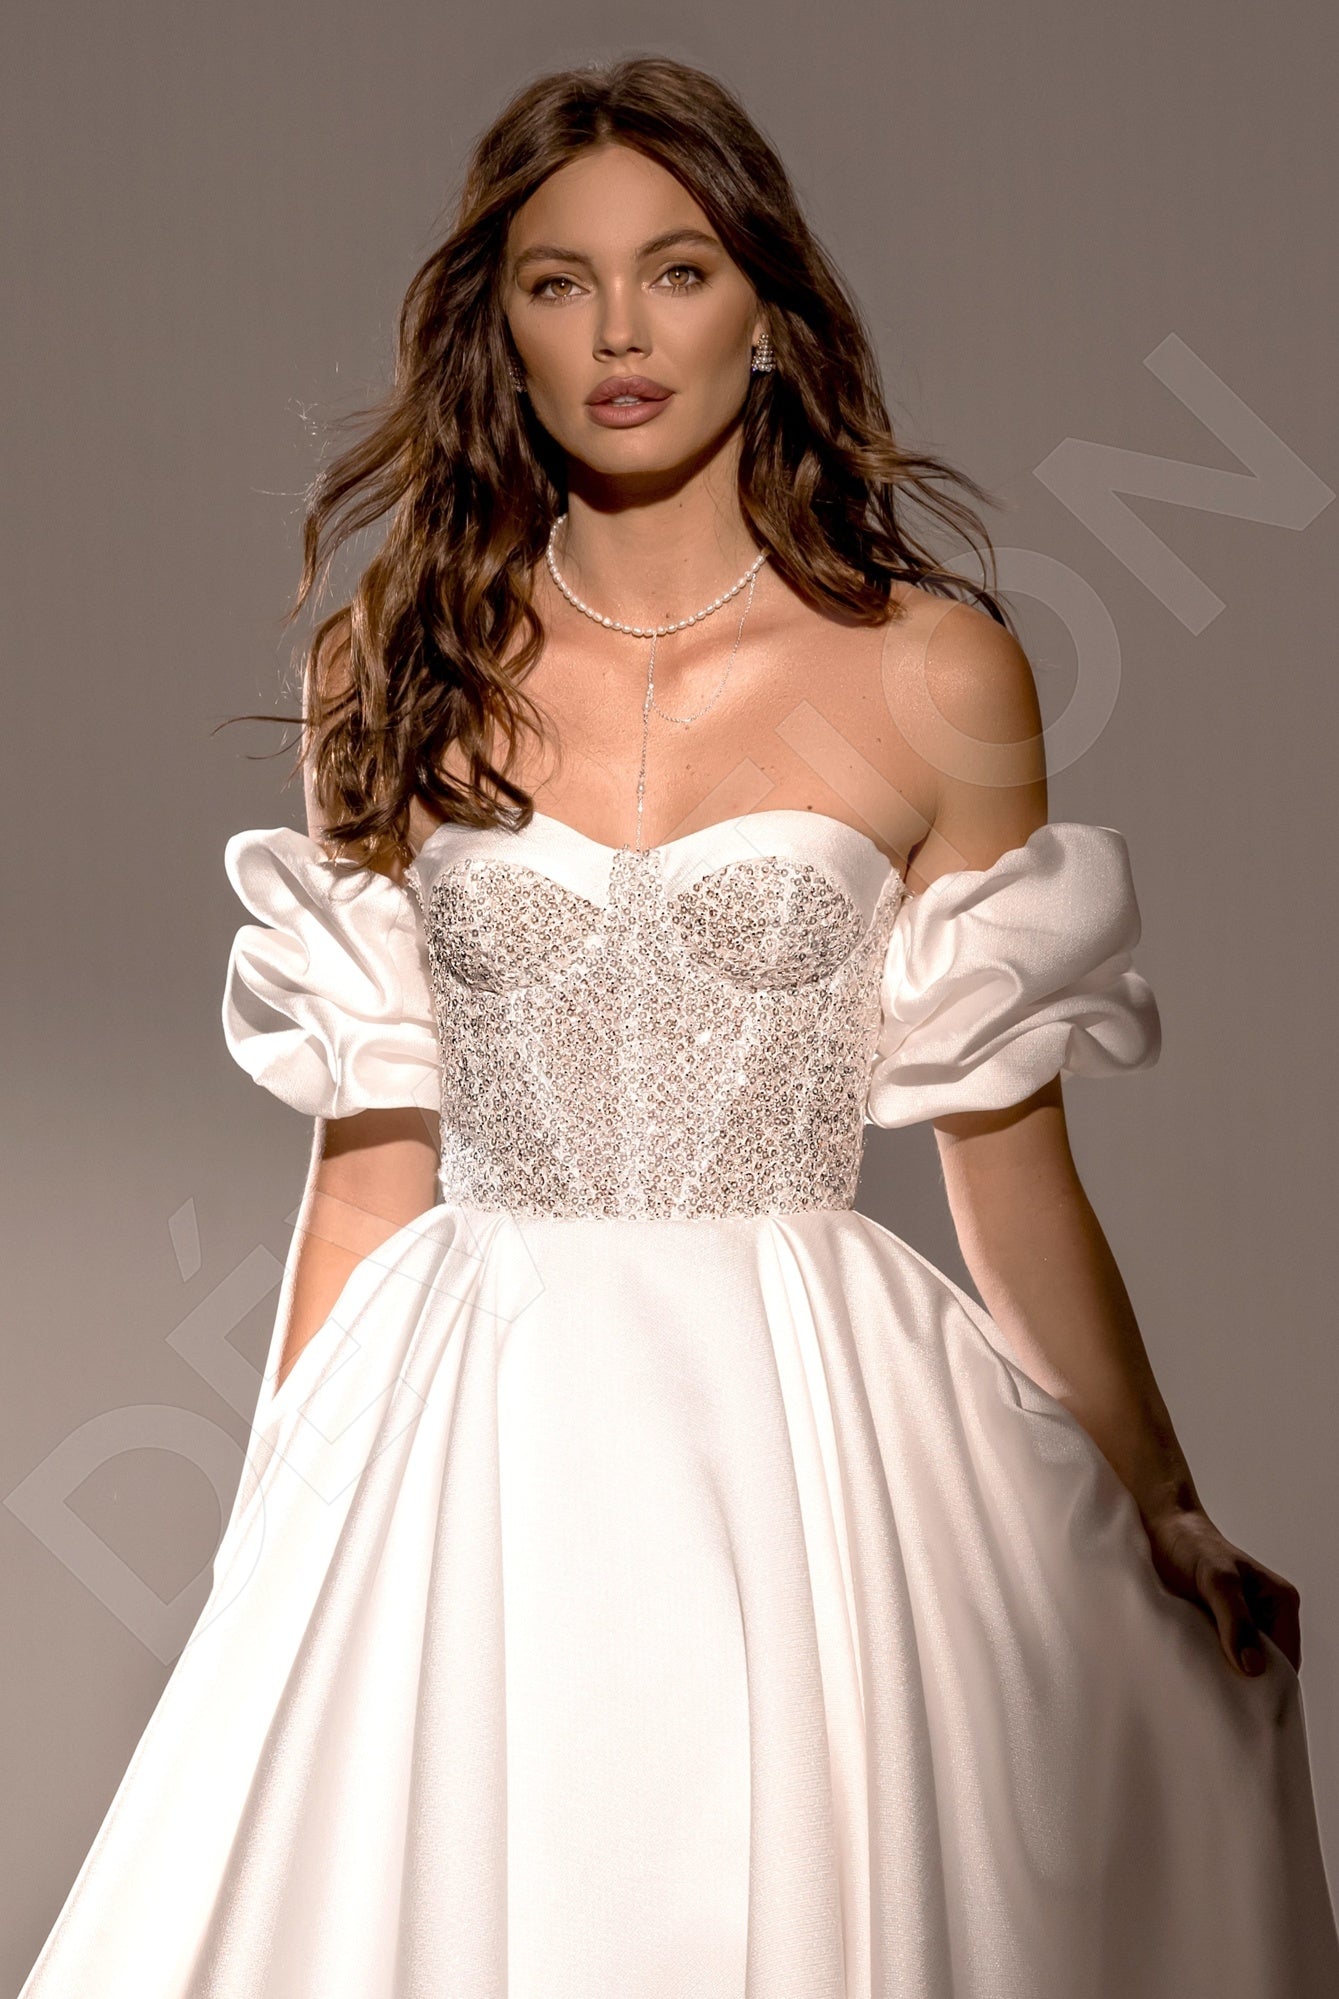 Nellia A-line Sweetheart Ivory Wedding dress